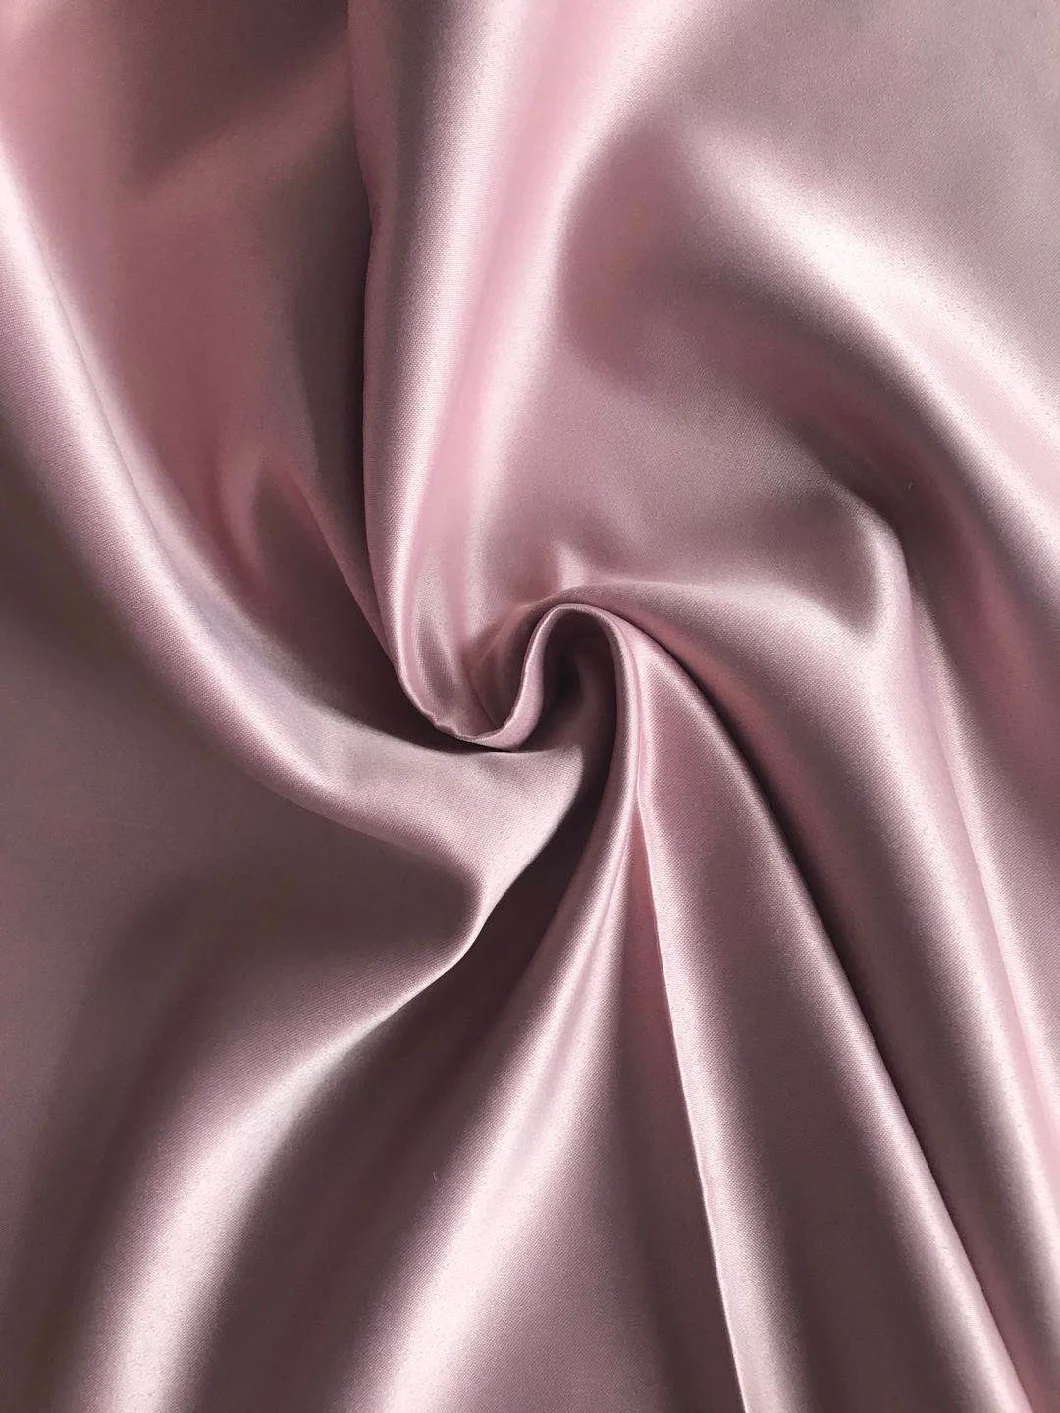 Satin Fabric Promotional Top Quality 100% Polyester Satin Fabric Microfiber Women Garment Fabric